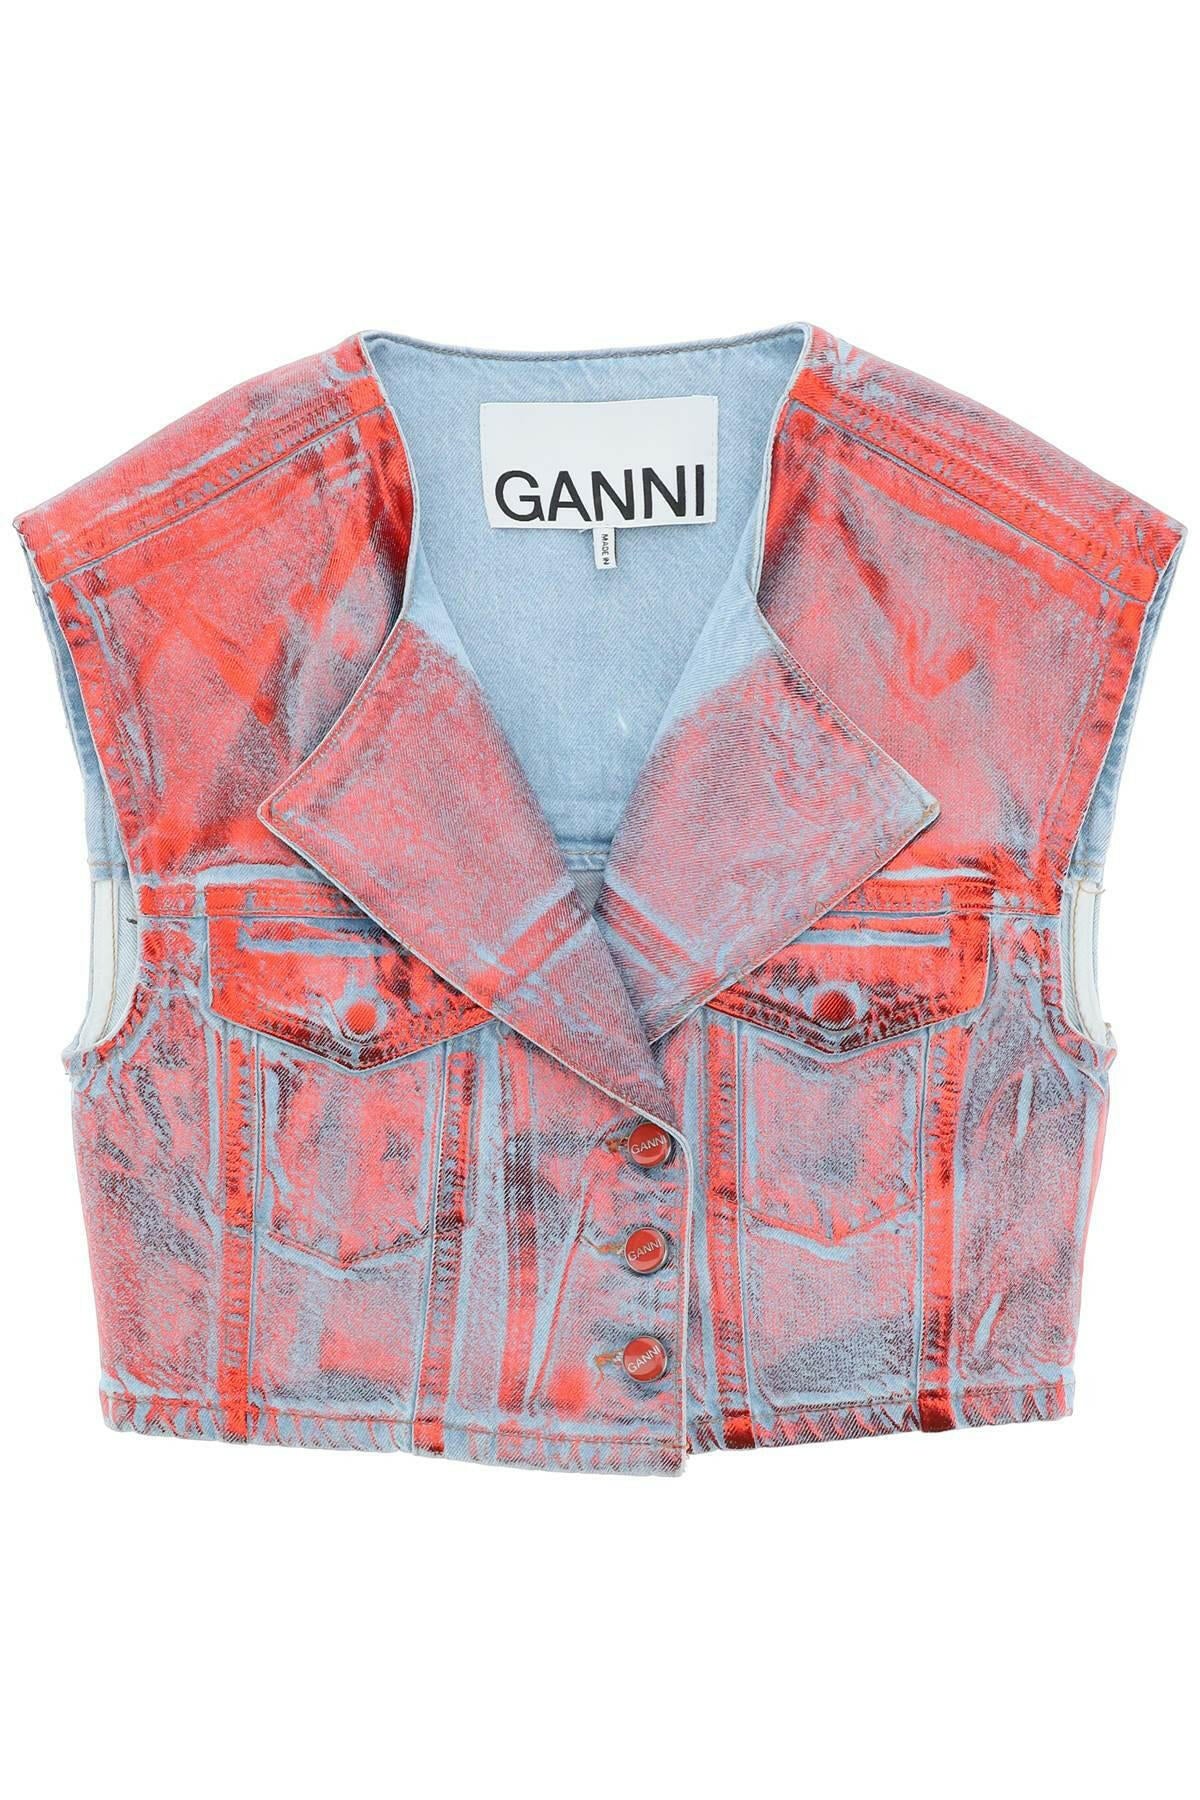 Ganni Cropped Vest In Laminated Denim - JOHN JULIA